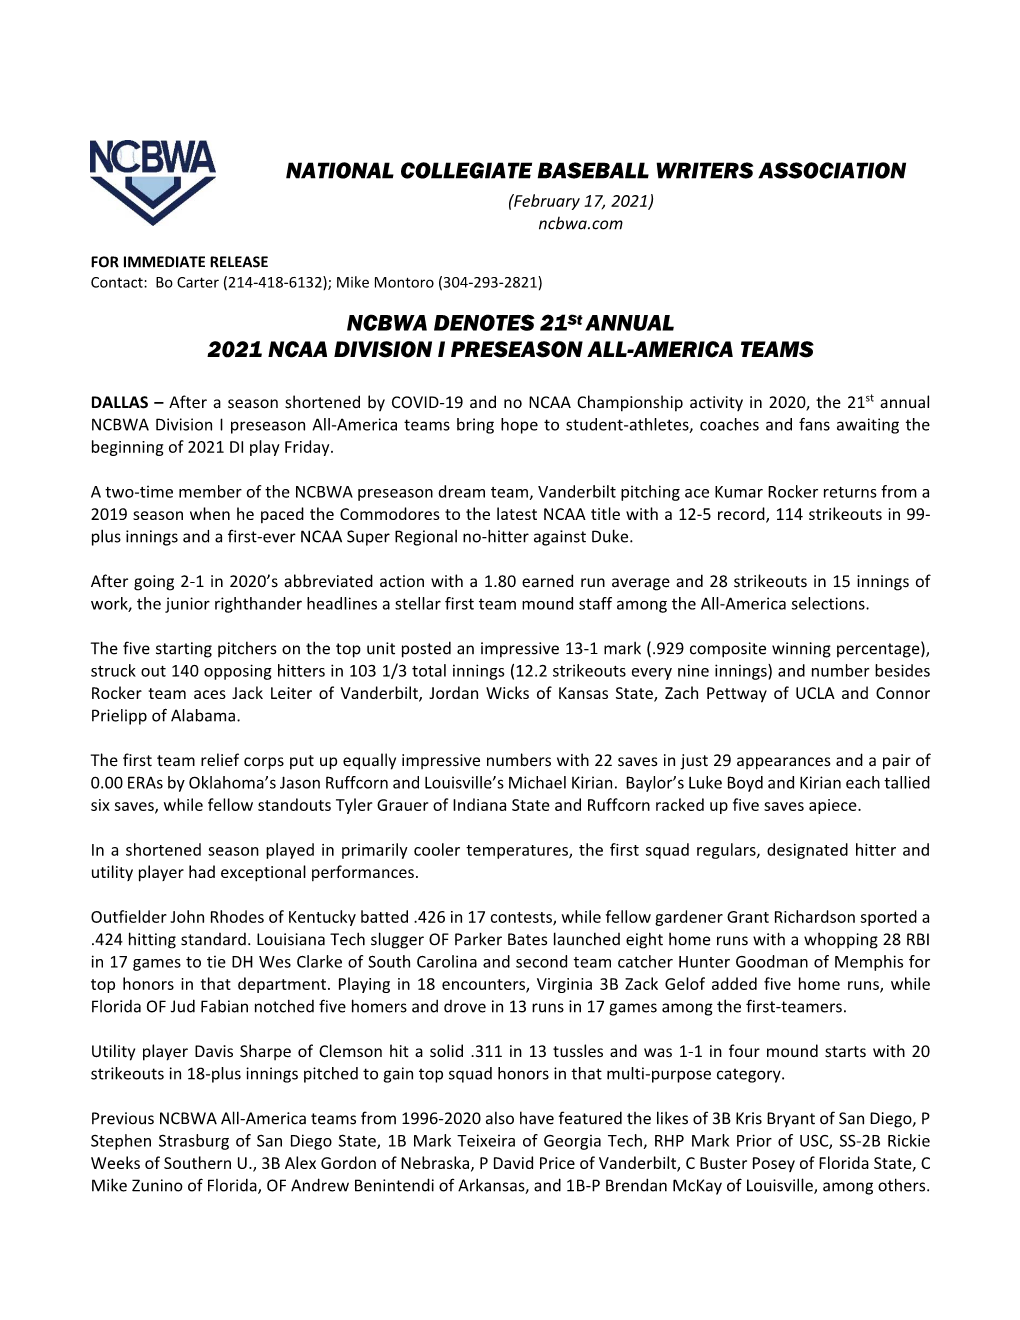 2021 NCBWA Division I Preseason All-America Team